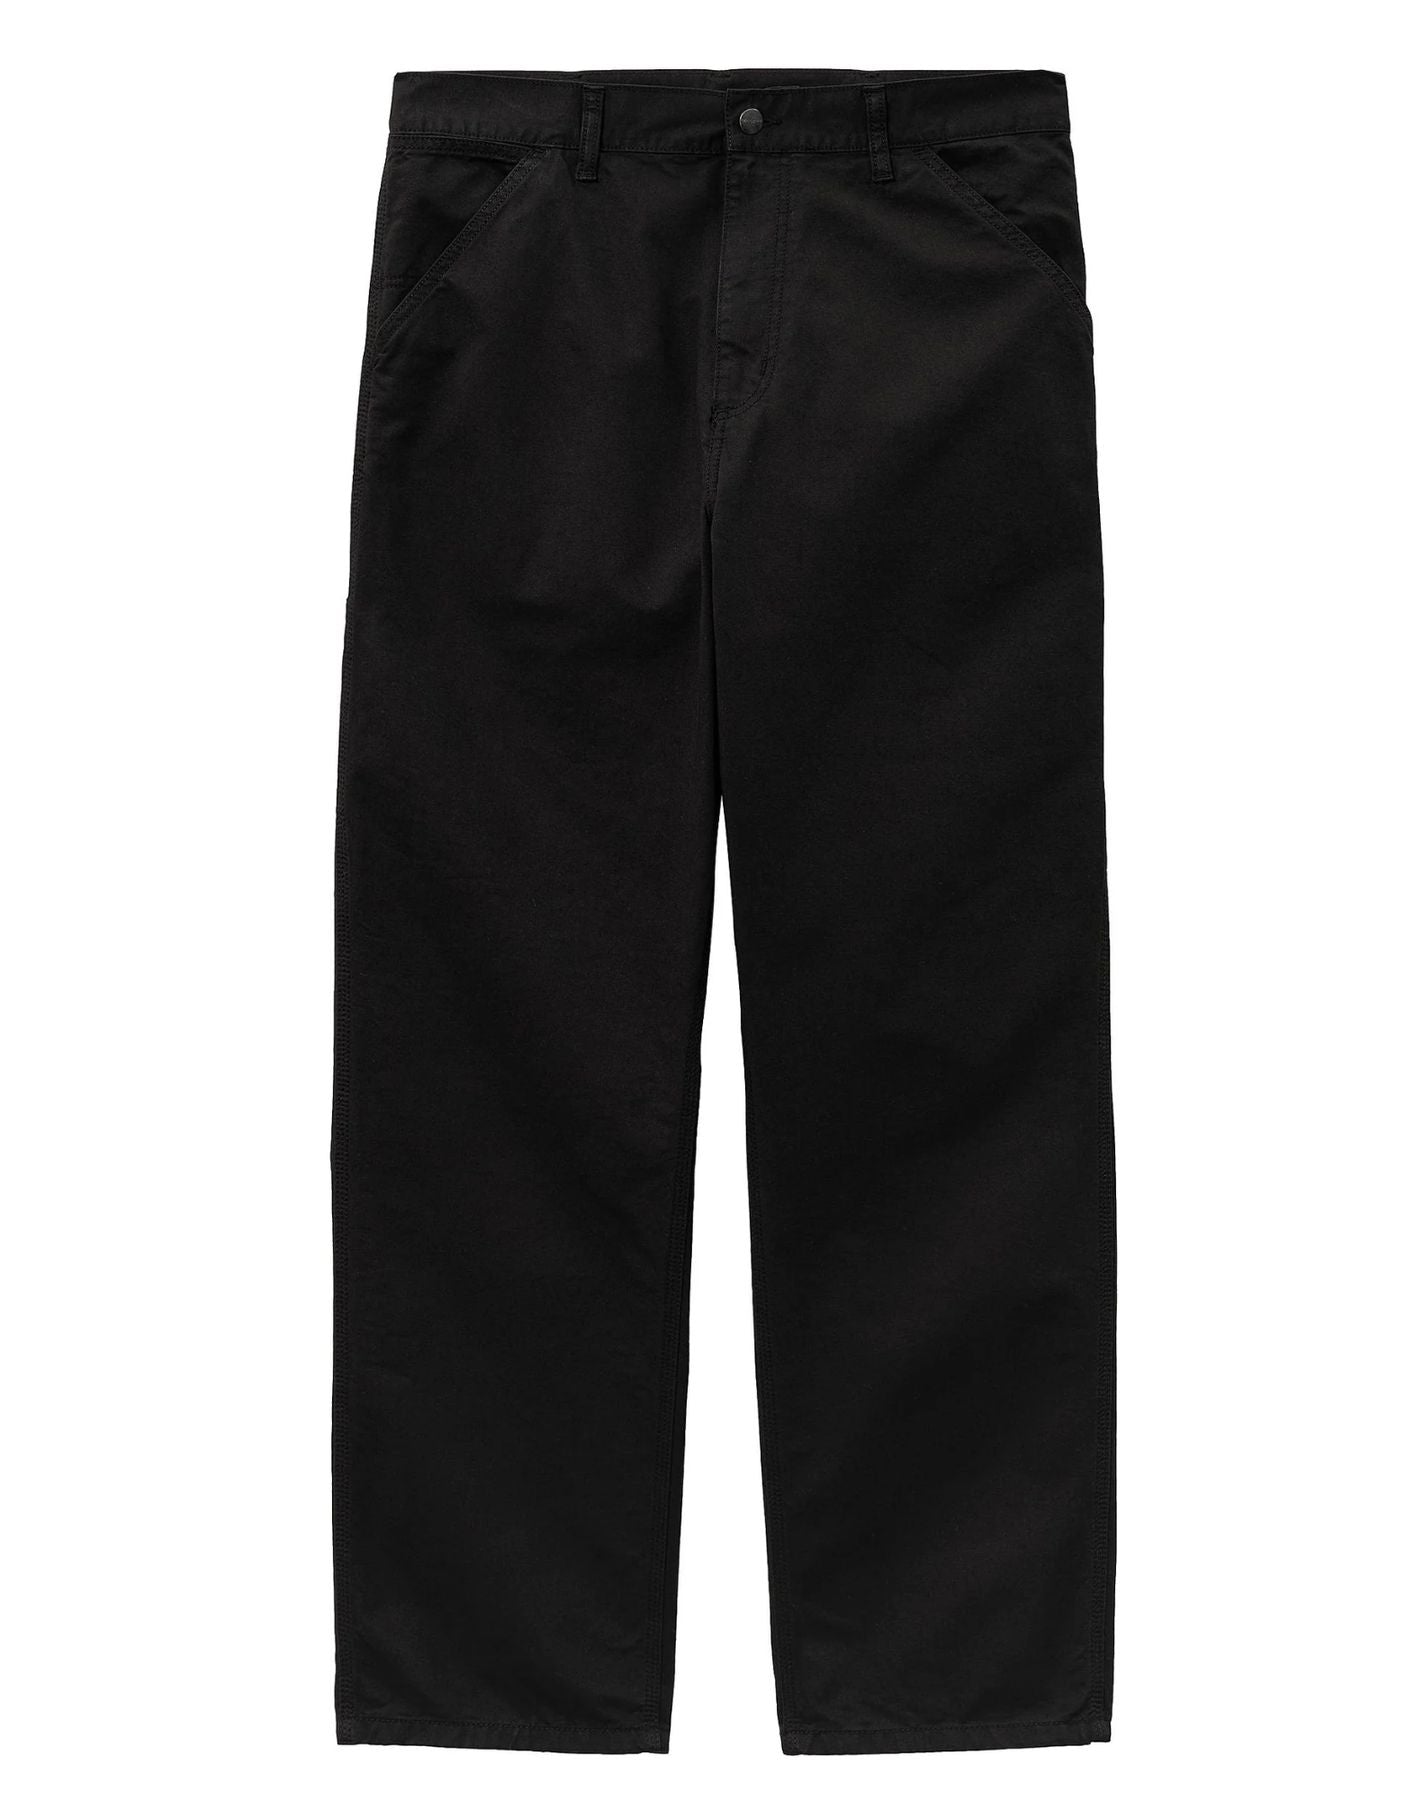 Pants for man I031499 BLACK CARHARTT